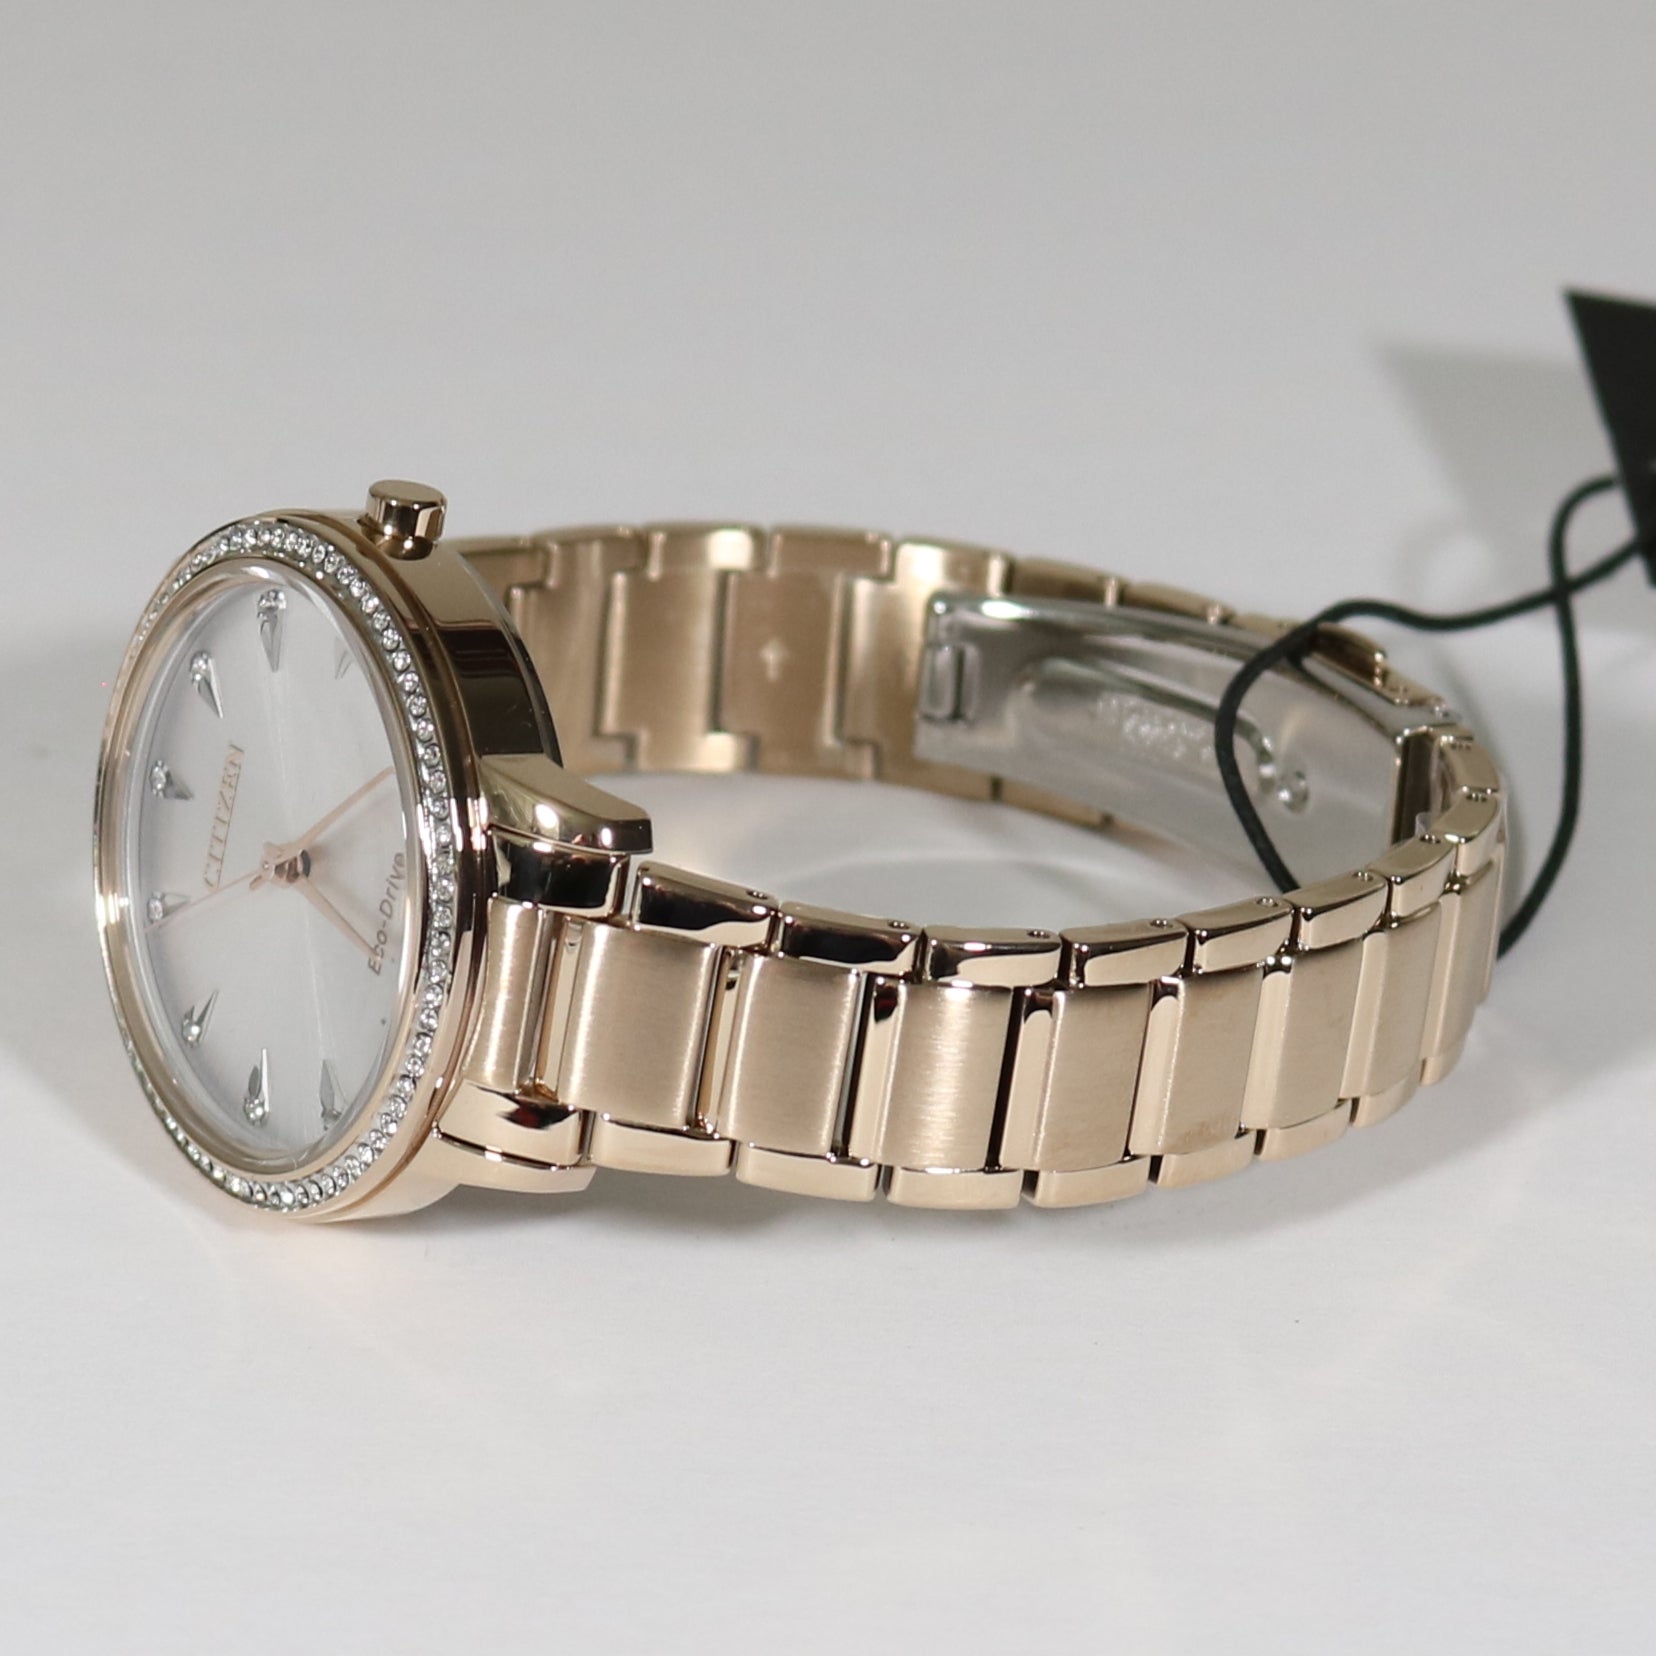 CITIZEN Women's Silhouette Crystal Watch FE7043-55A - Silver Teardrop Crystal Dial - Rose Gold-tone Stainless Steel Case - Round Swarovski Crystal Bezel - Rose Gold-tone Bracelet